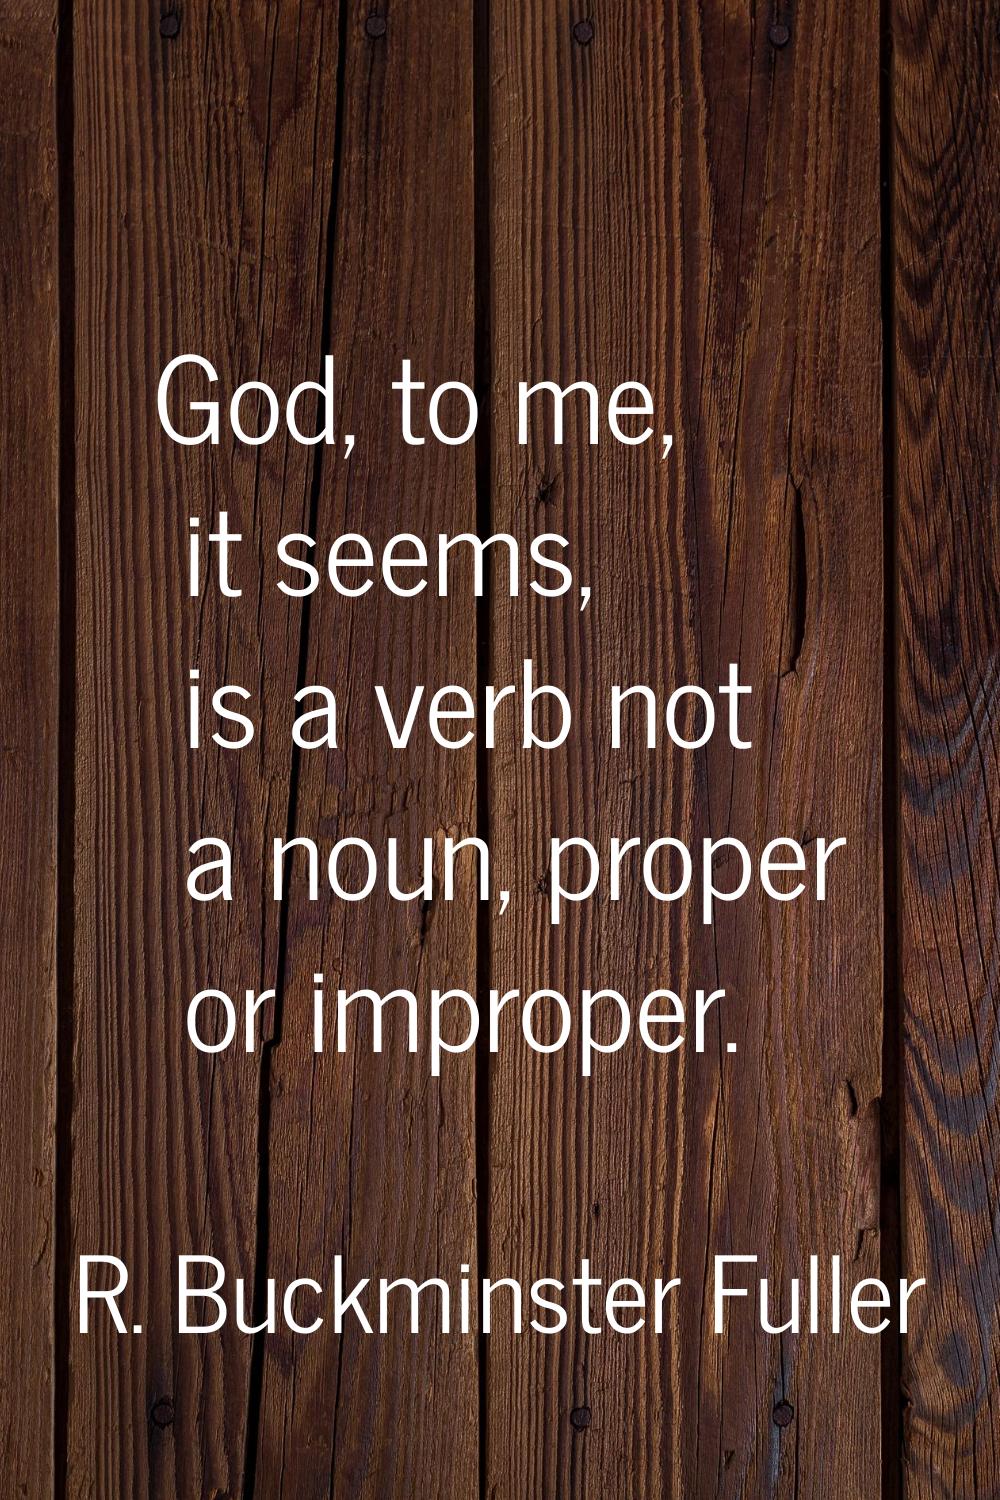 God, to me, it seems, is a verb not a noun, proper or improper.